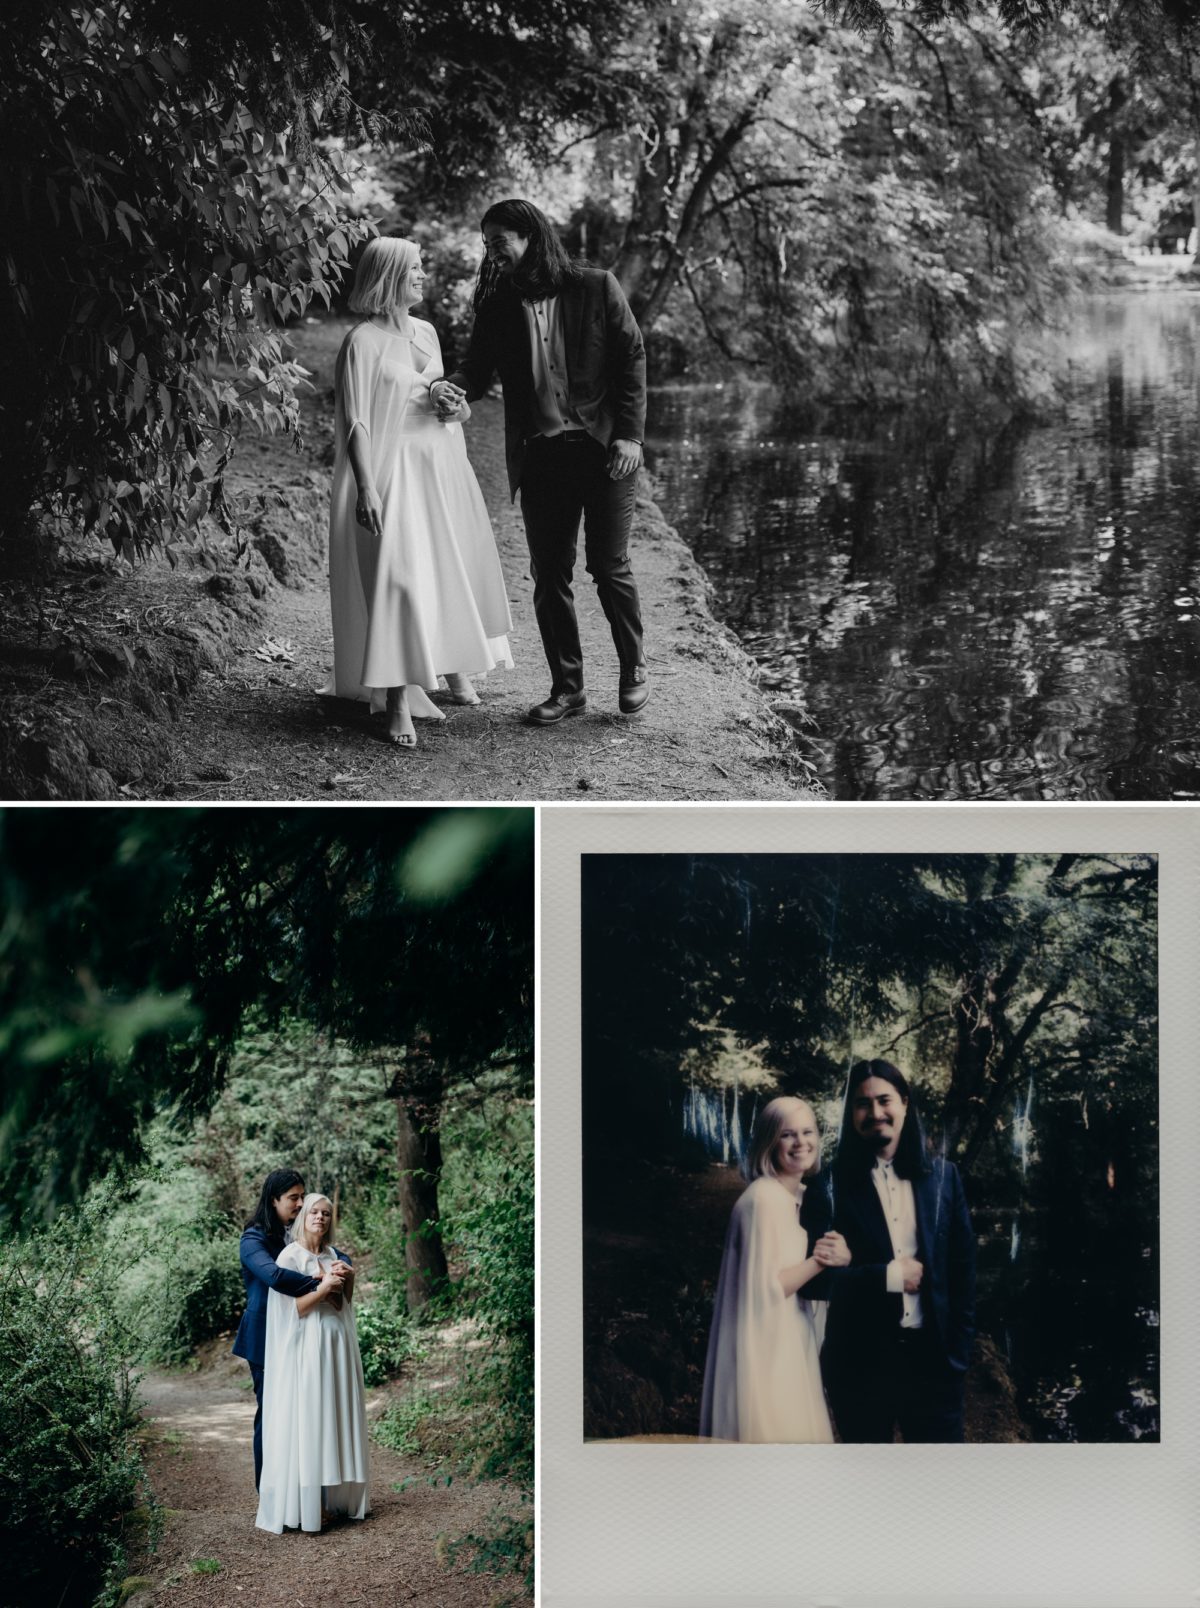 Polaroid wedding photography by Briana Morrison